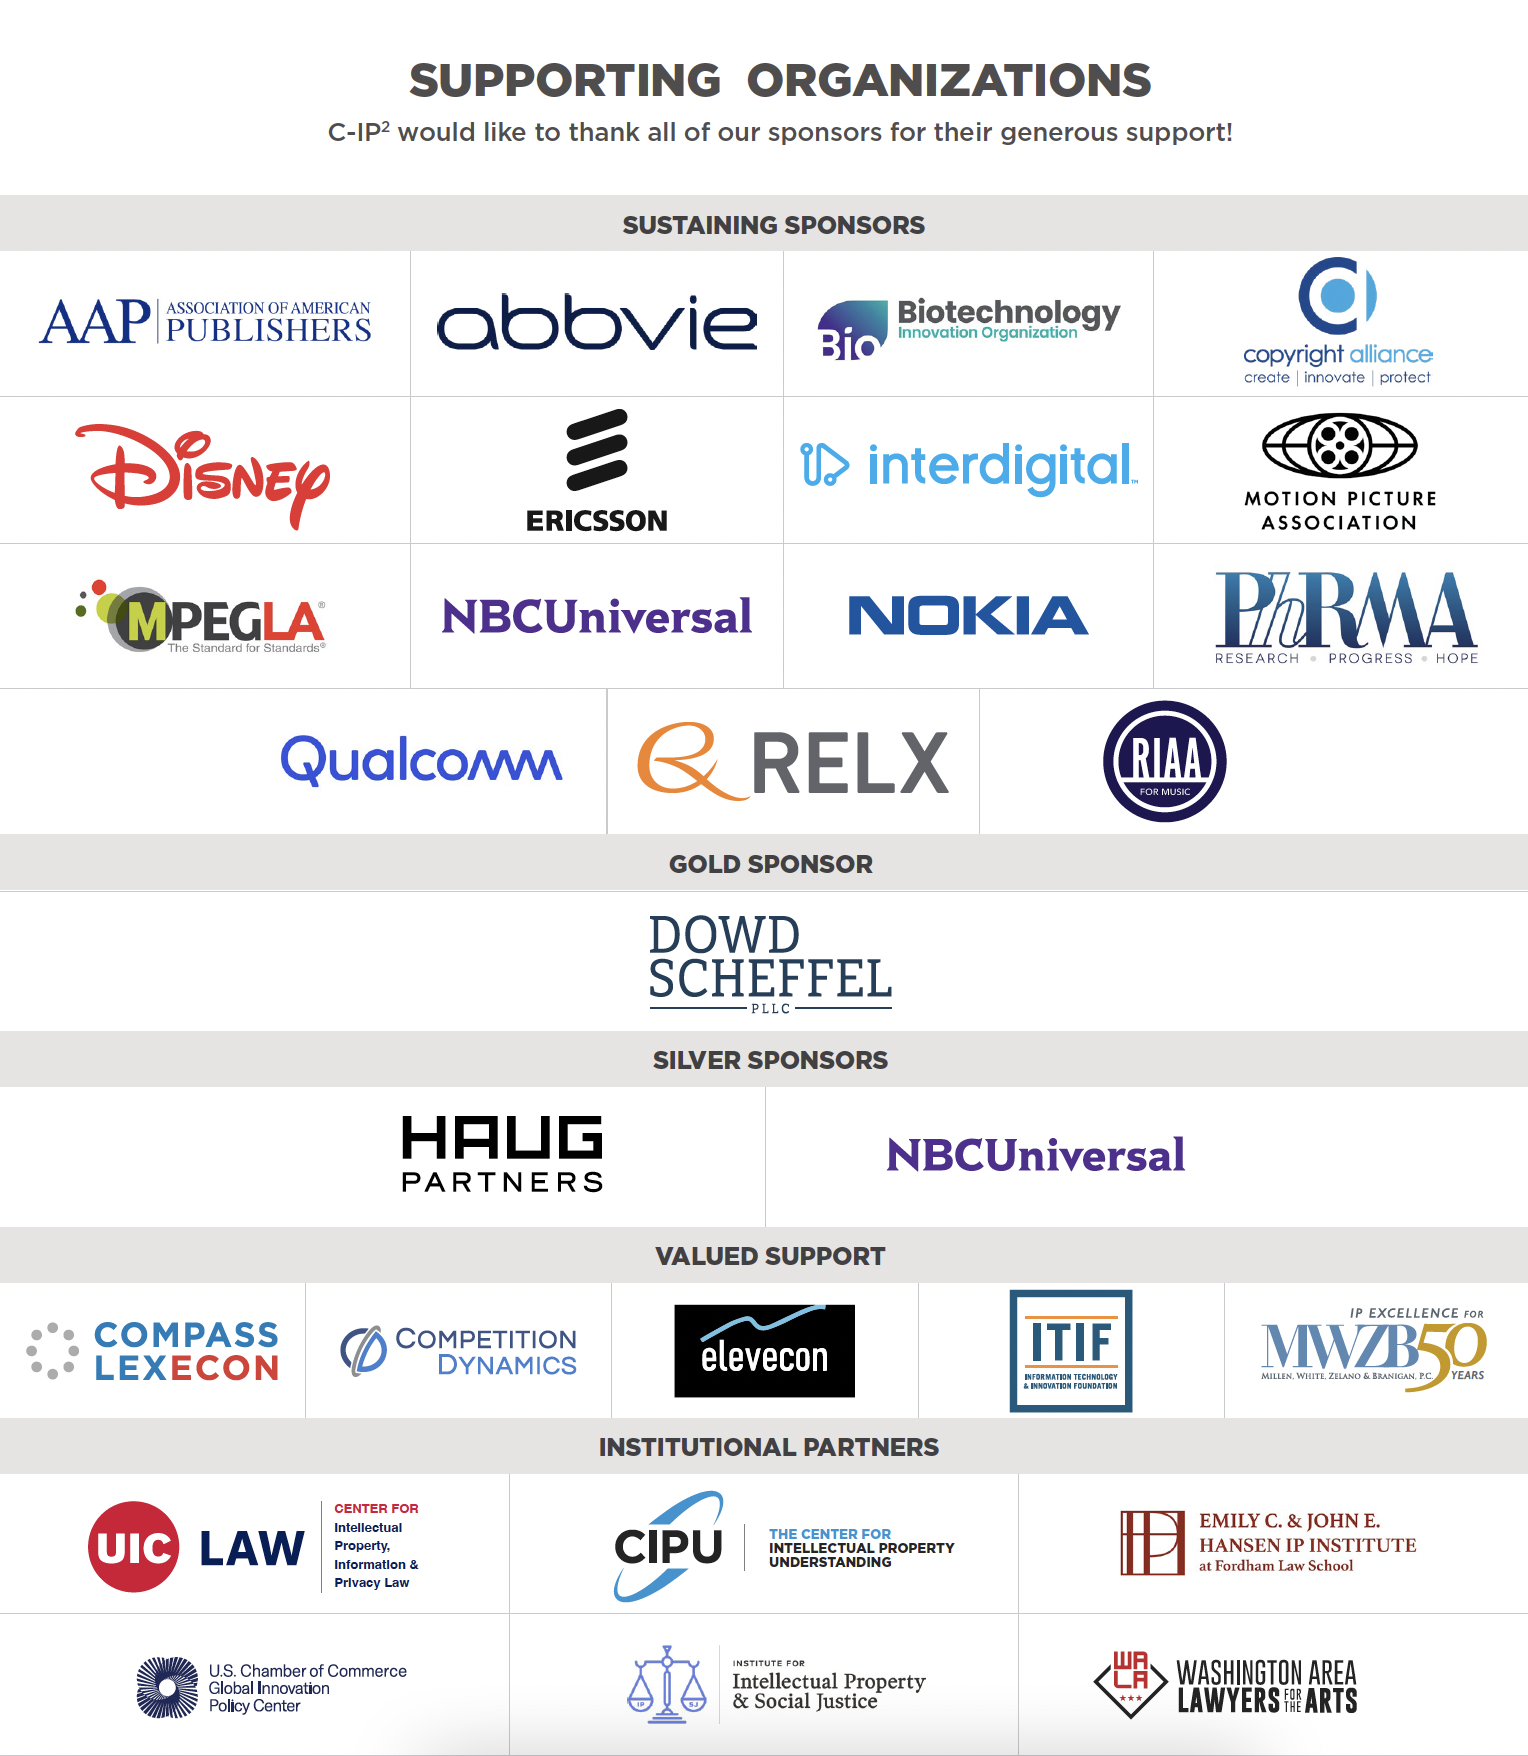 Sponsor Logos: Sustaining Sponsors: AAP, AbbVie, BIO, Copyright Alliance, Disney, Ericsson, Interdigital, MPA, MPEG LA, NBCUniversal, Nokia, PhRMA, Qualcomm, RELX, RIAA. Gold Sponsor: Dowd Scheffel PLLC. Silver Sponsors: Haug Partners, NBCUniversal. Valued Support: Compass Lexecon, Competition Dynamics, Elevecon, ITIF, MWZB. Institutional Partners: CIPIPL at UIC Law; CIPU; Fordham IP Institute; GIPC; IIPSJ; WALA